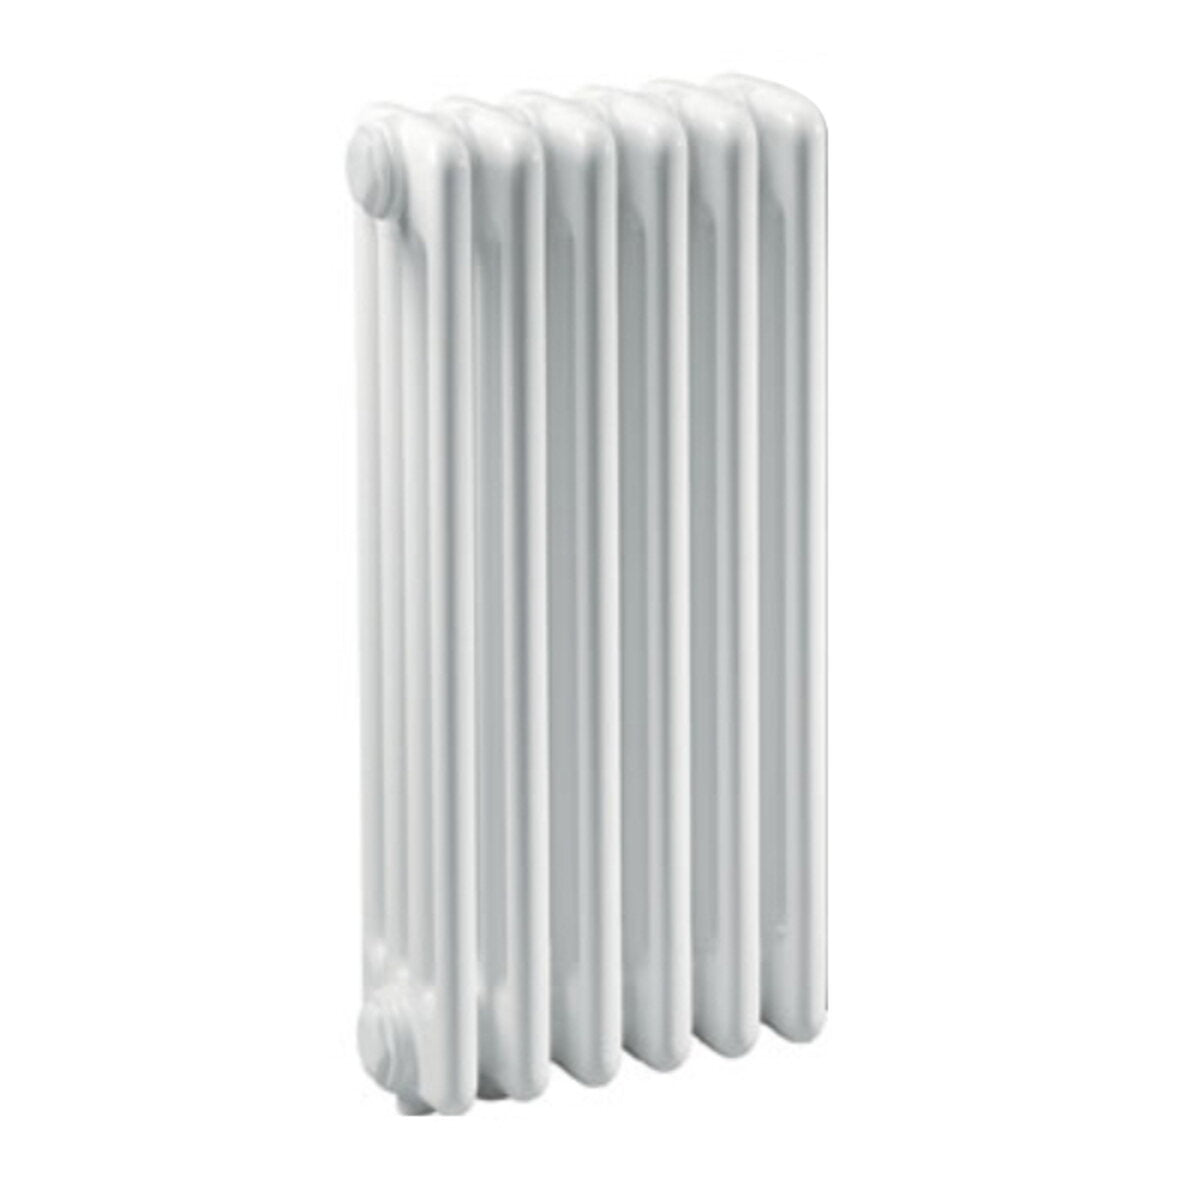 Ercos Comby steel column radiator 6 elements 3 columns center distance 800 mm